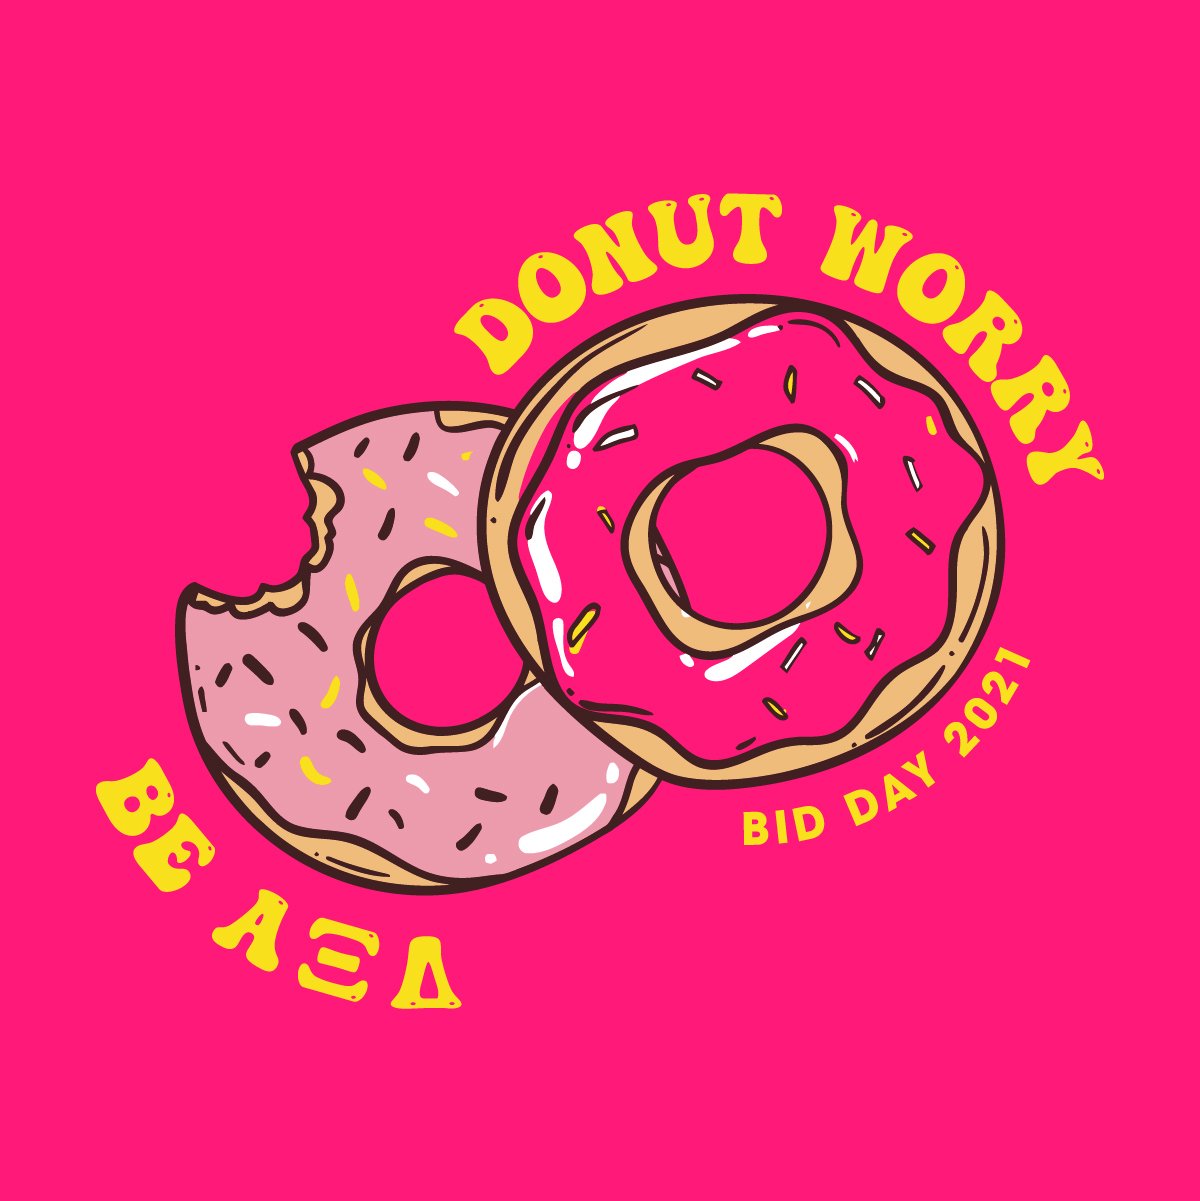 Donut Worry